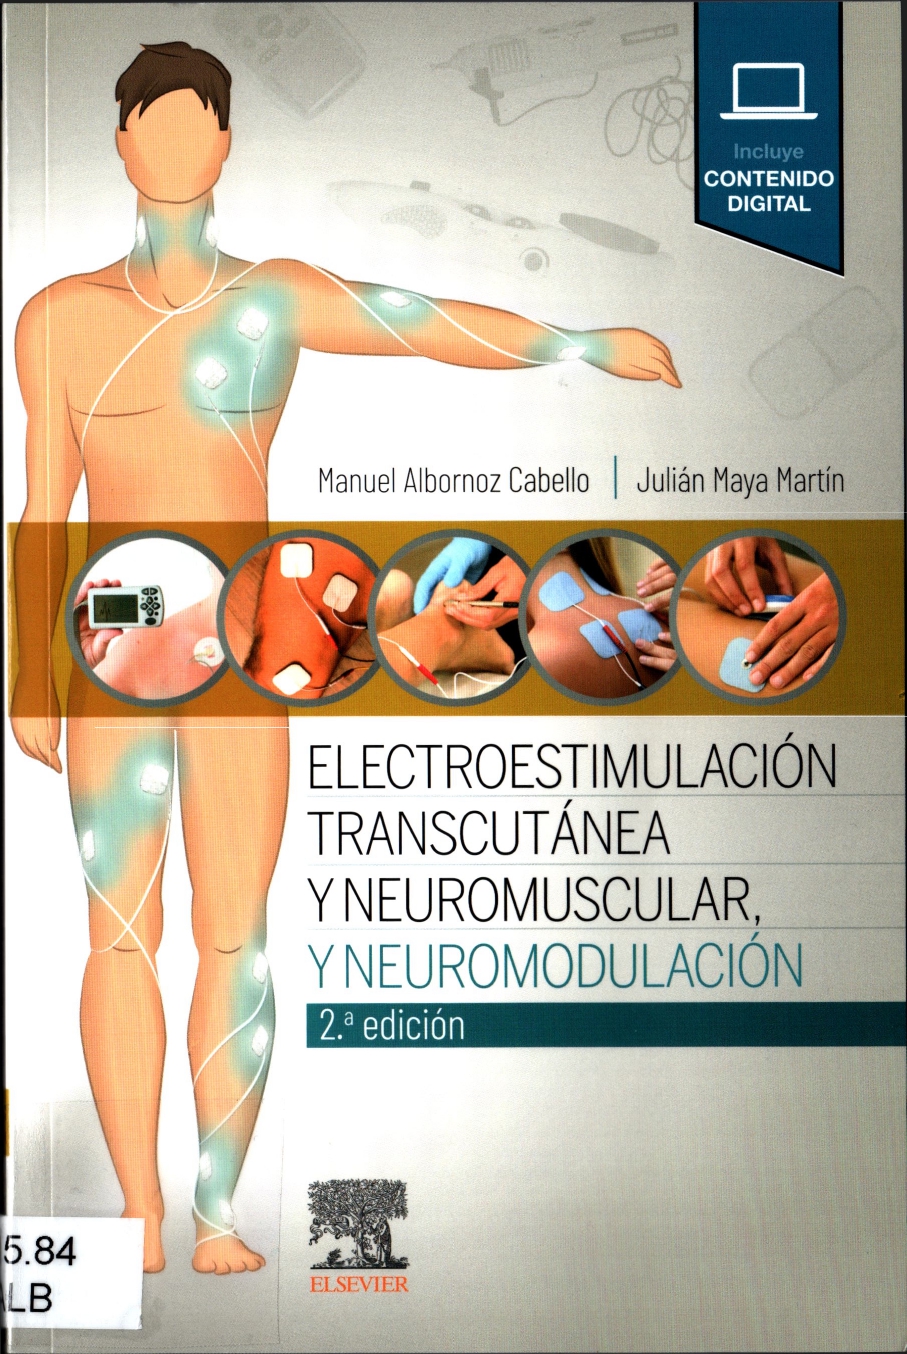 Imagen de portada del libro Electroestimulación transcutánea , neuromuscular y neuromodulación